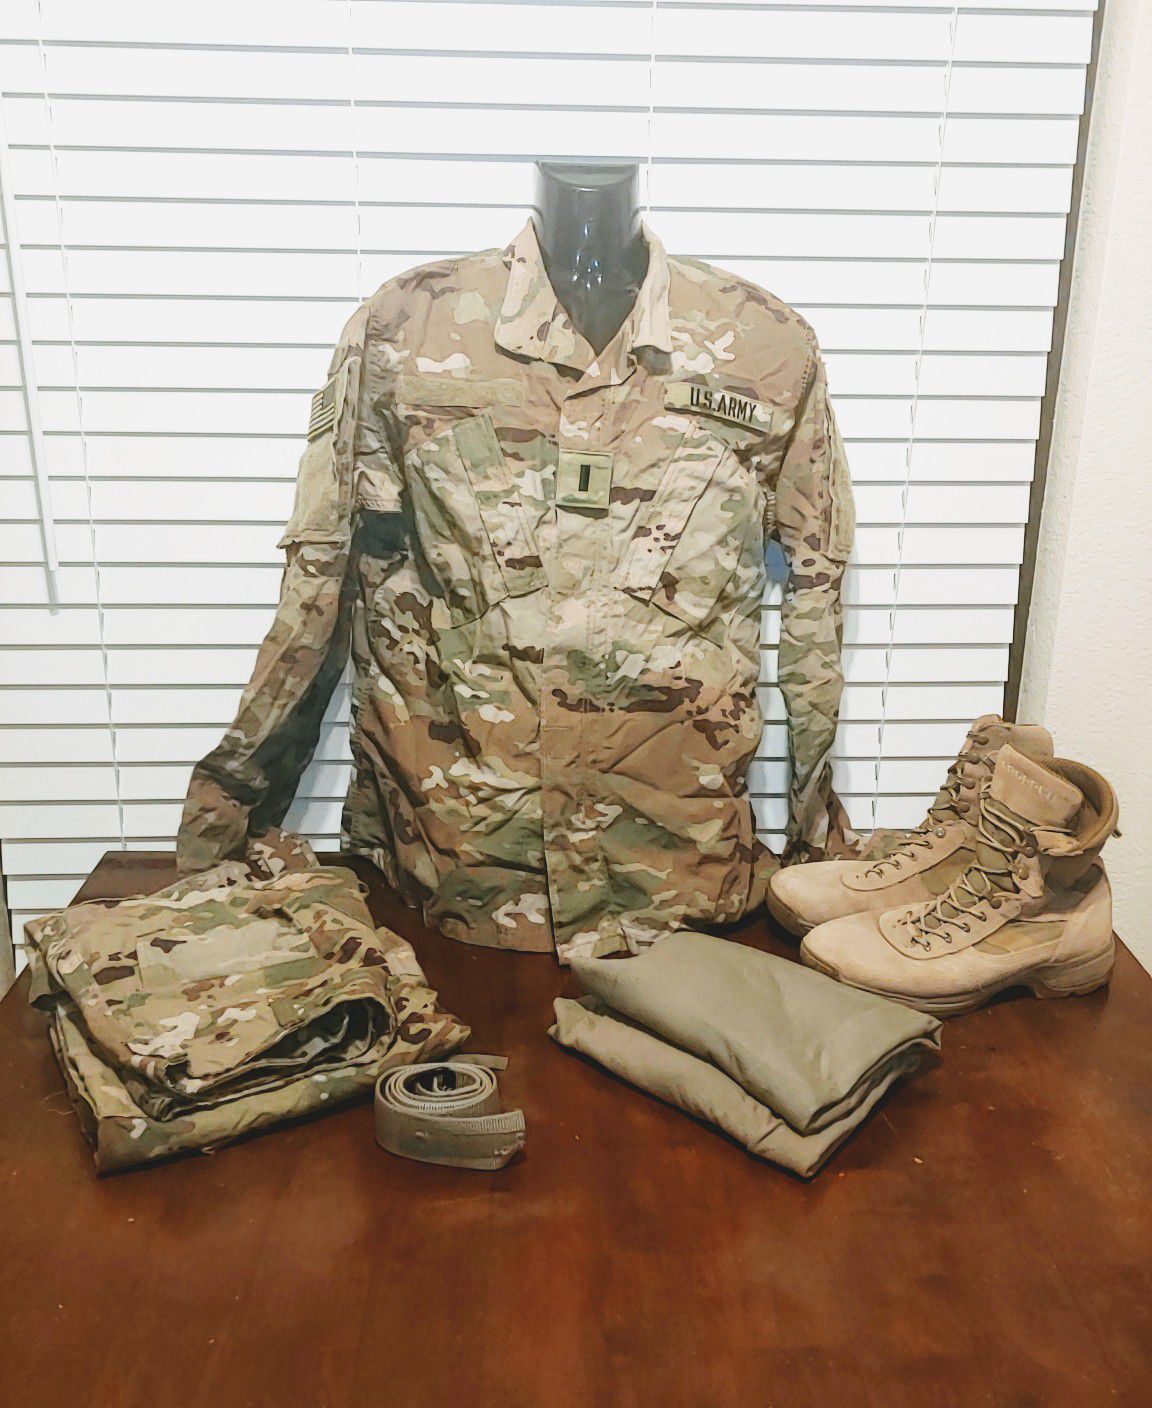 US Army OCP set pants jacket boots belt patches